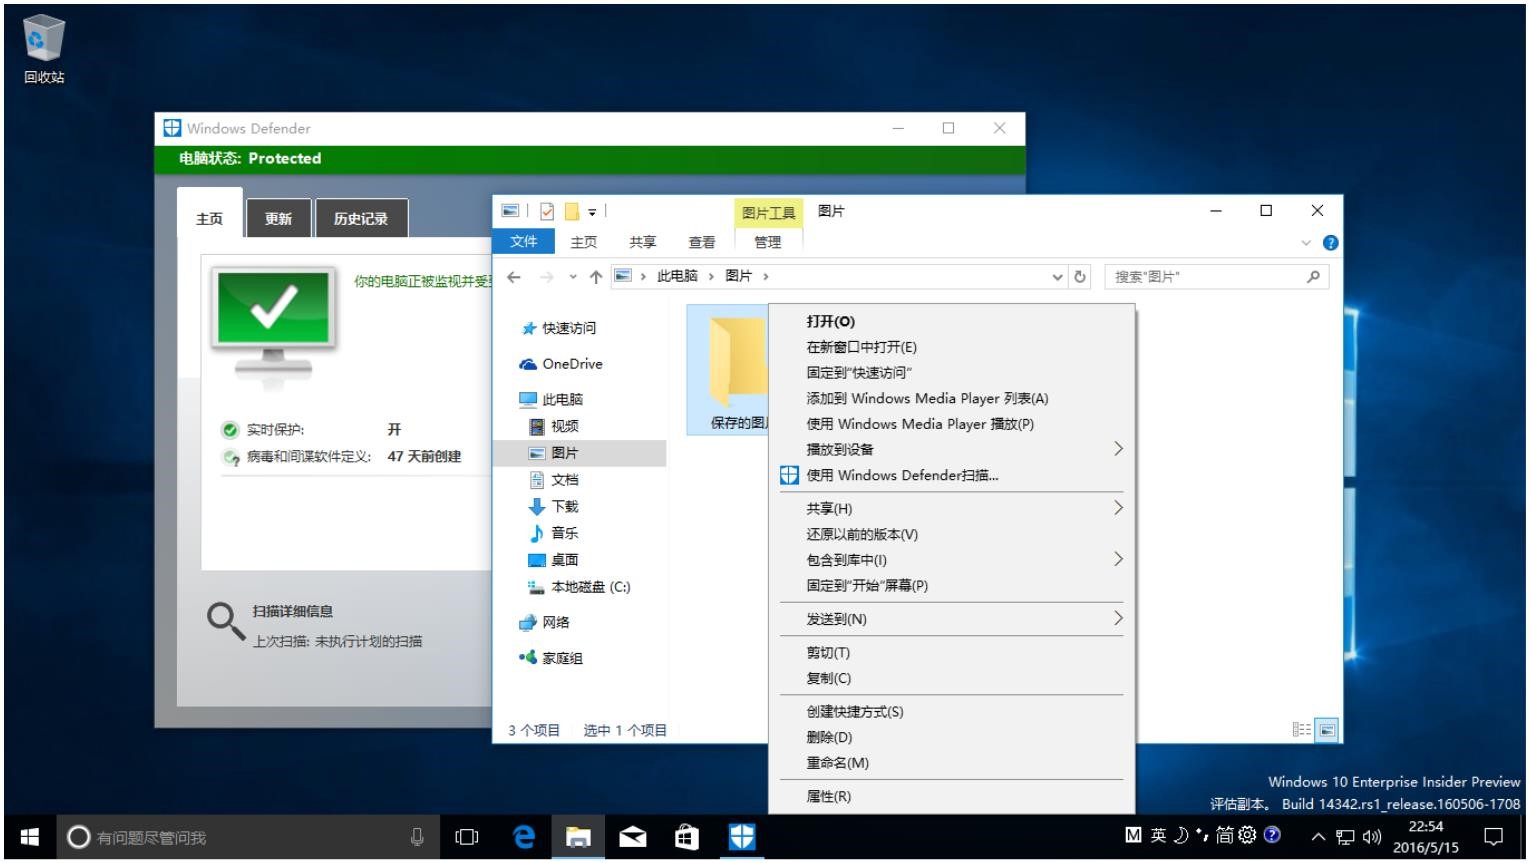 Windows10用户手册 - Windows10 Insider Preview - 新特性